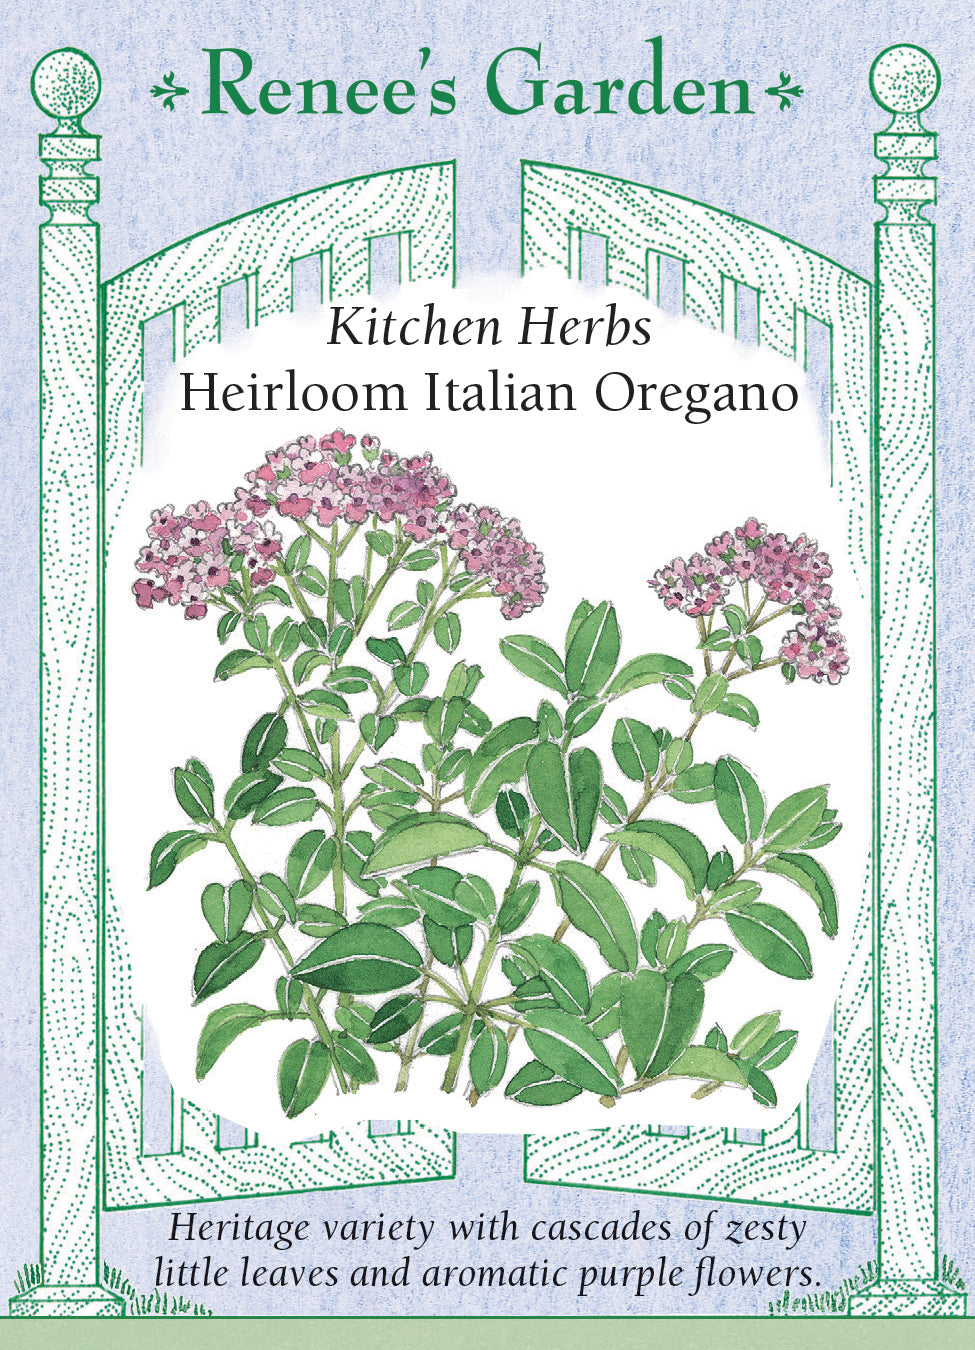 Heirloom Italian Oregano